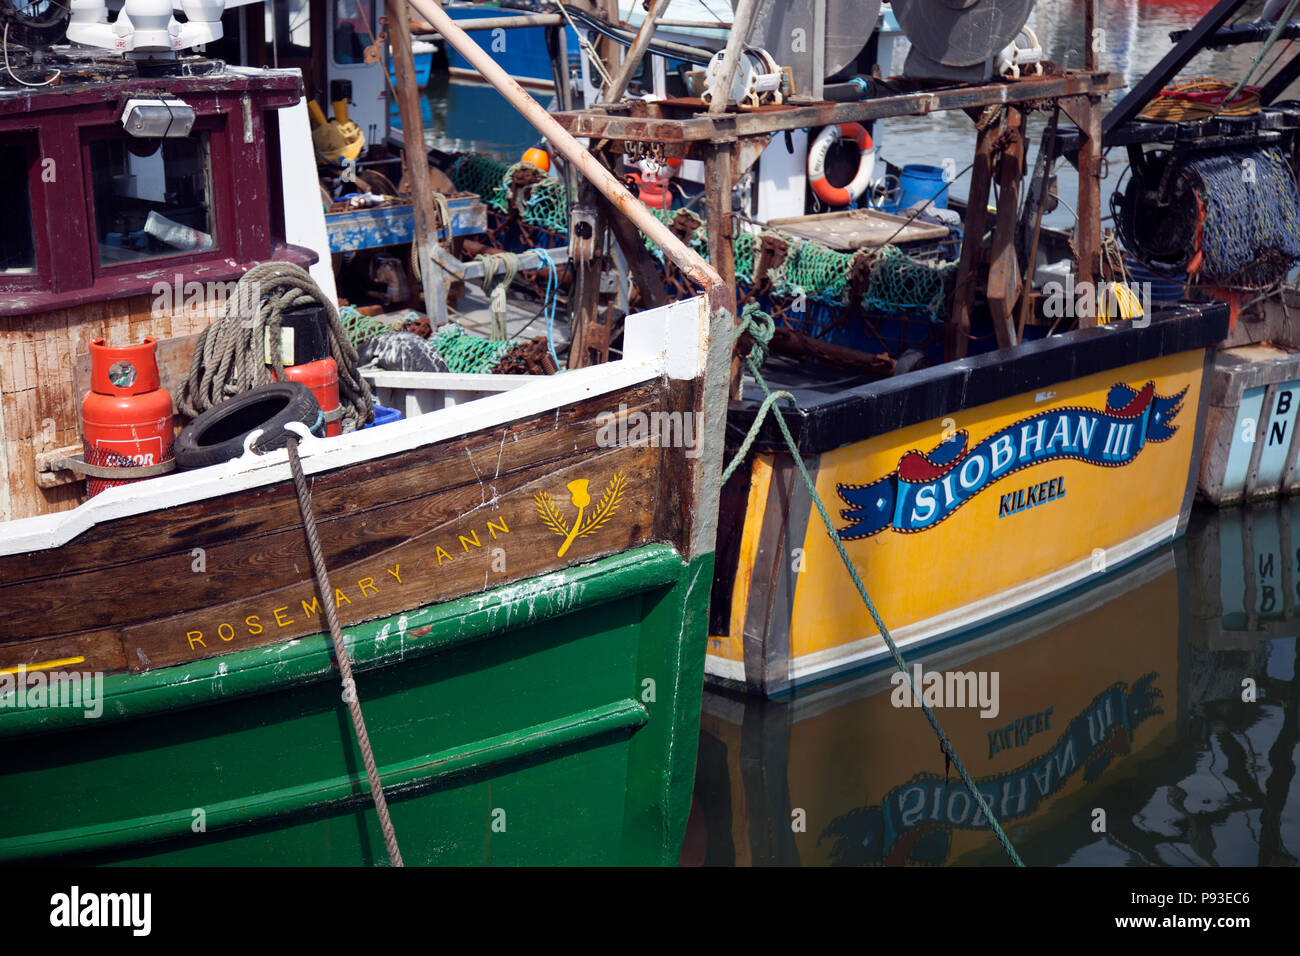 Rosemary Ann and Siobhan III, fishing trawlers in Kilkeel Harbour, County Down Stock Photo